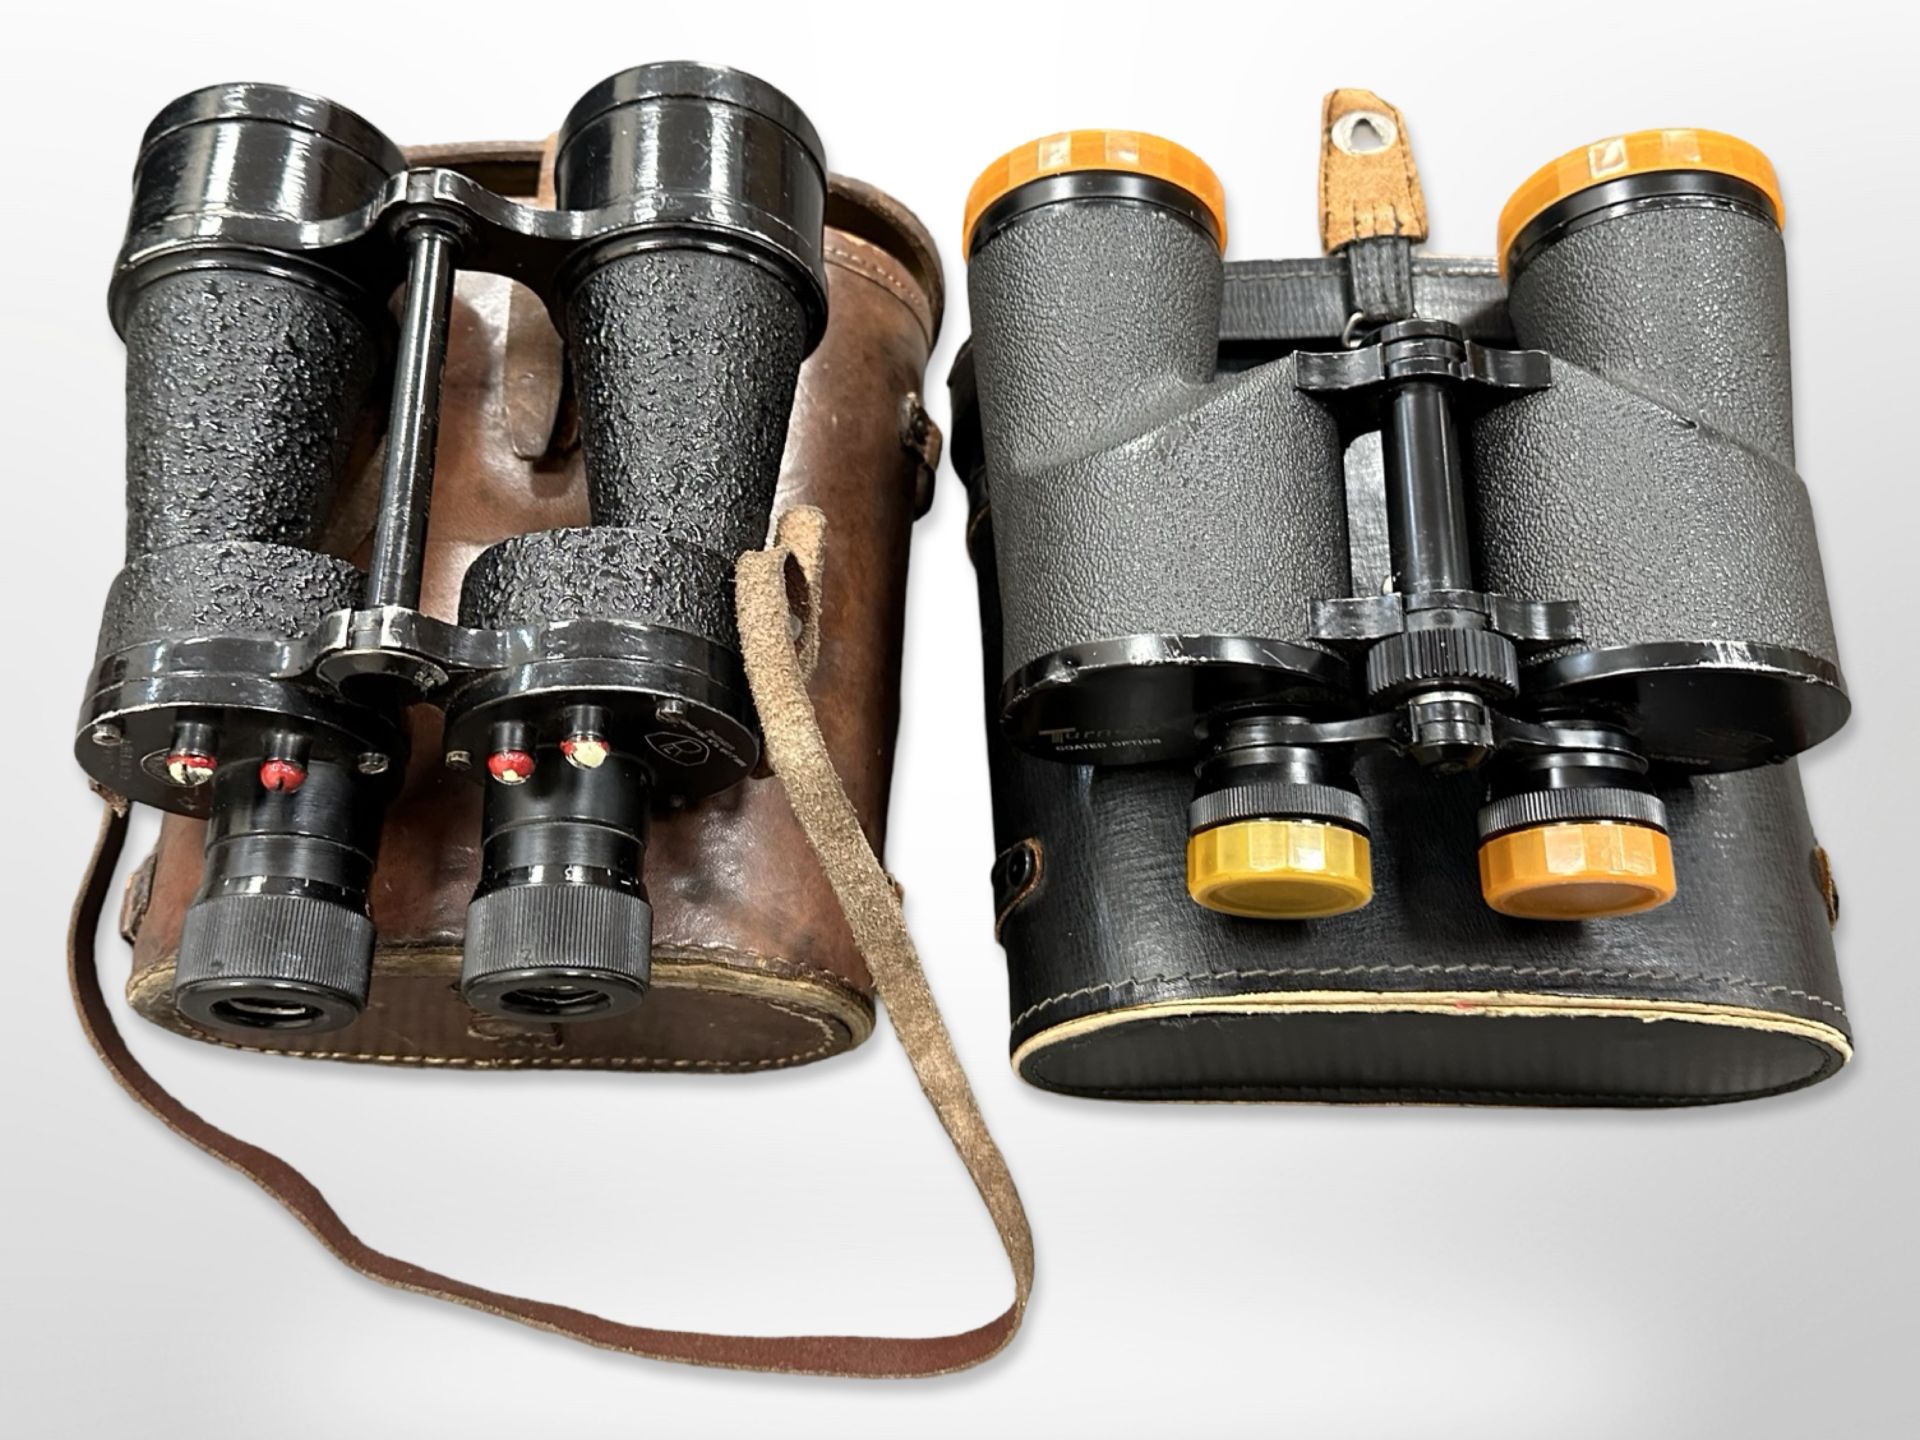 A pair of World War II binoculars, Binoprism No.